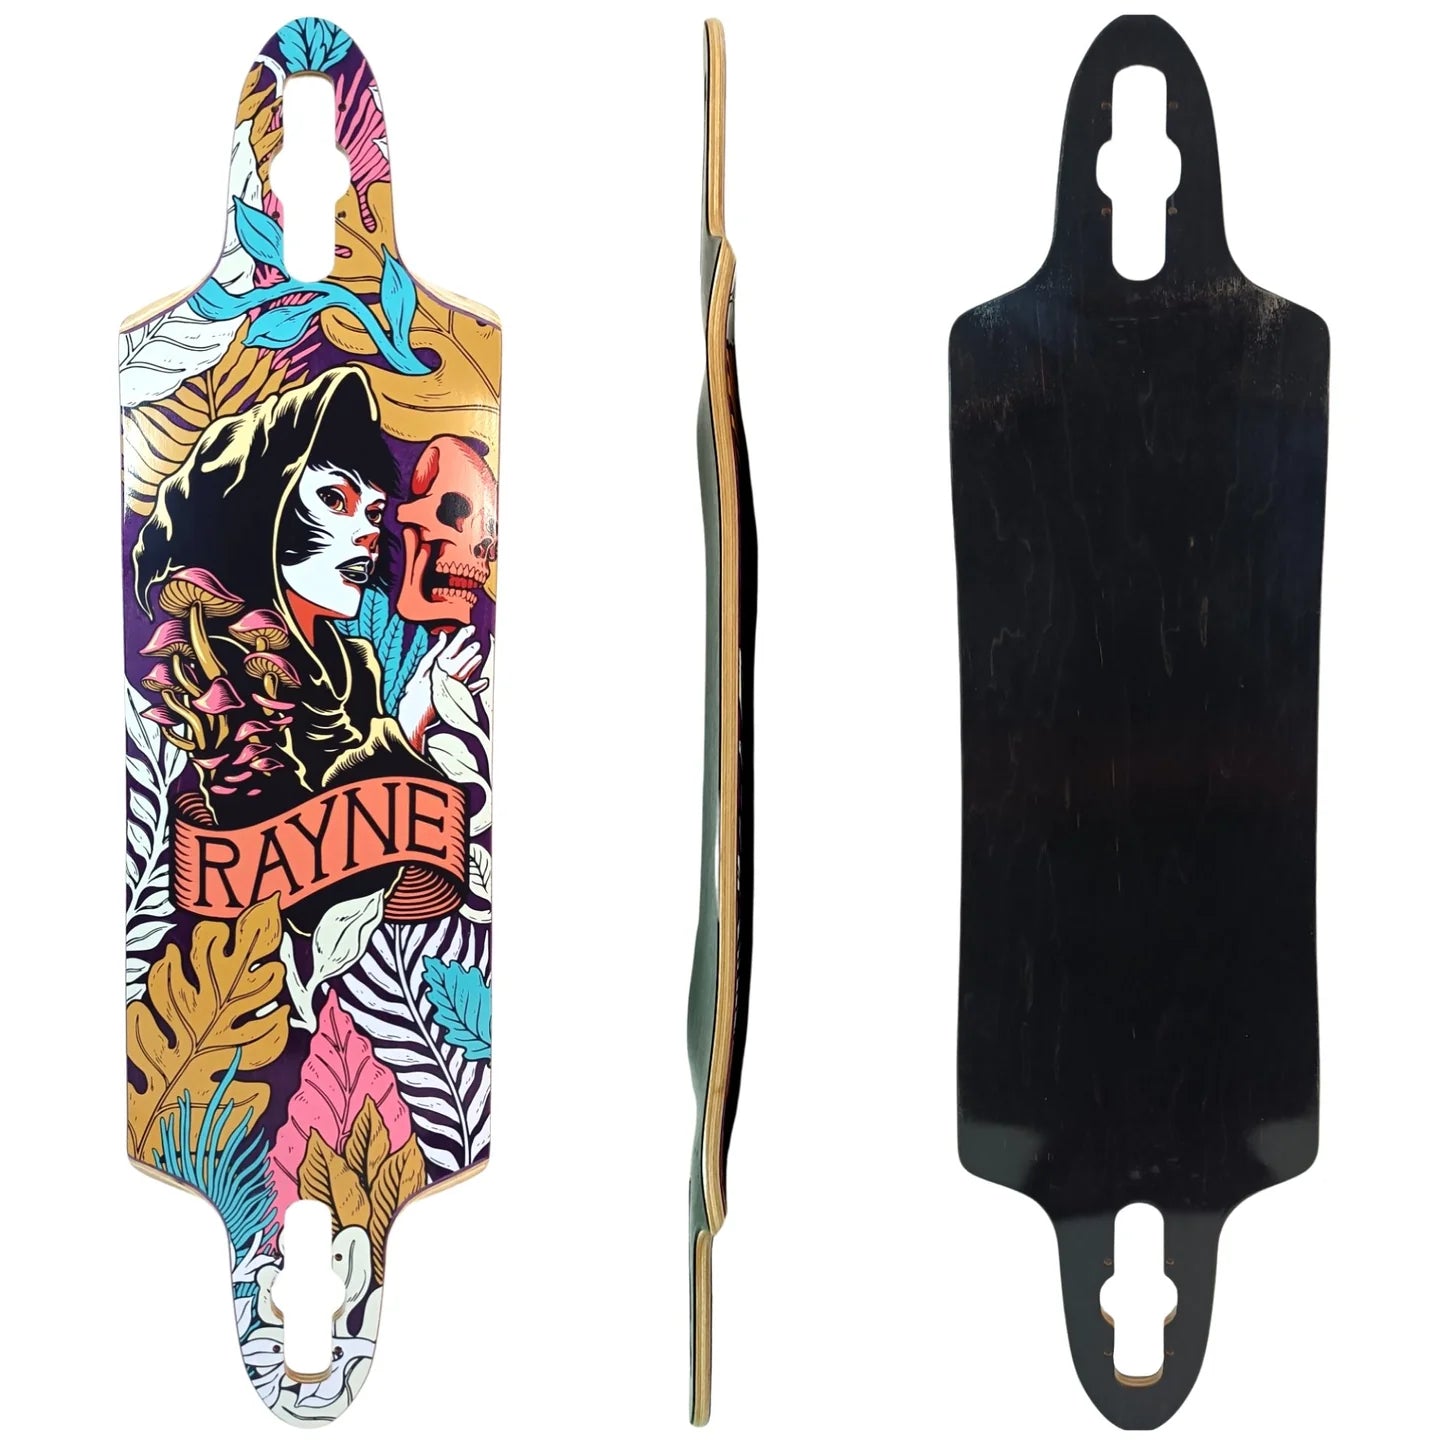 Rayne: Supreme 36'' Longboard Skateboard Deck